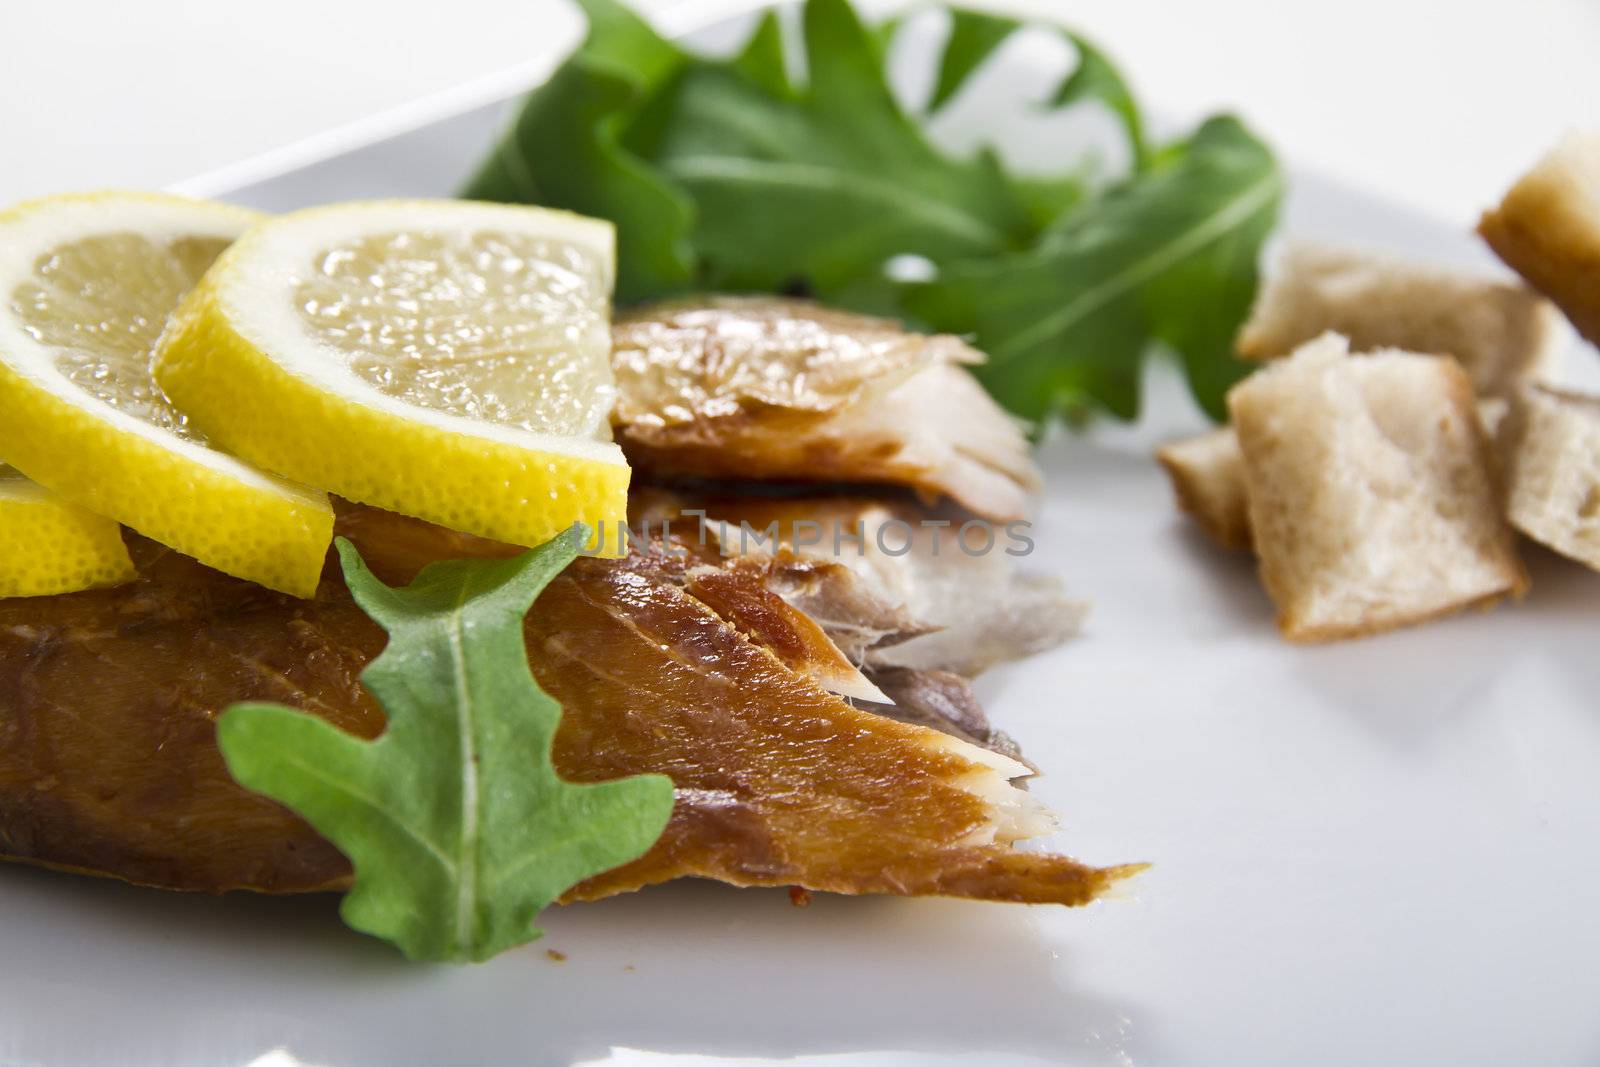 Smoked mackerel fish with lemon salad and bread